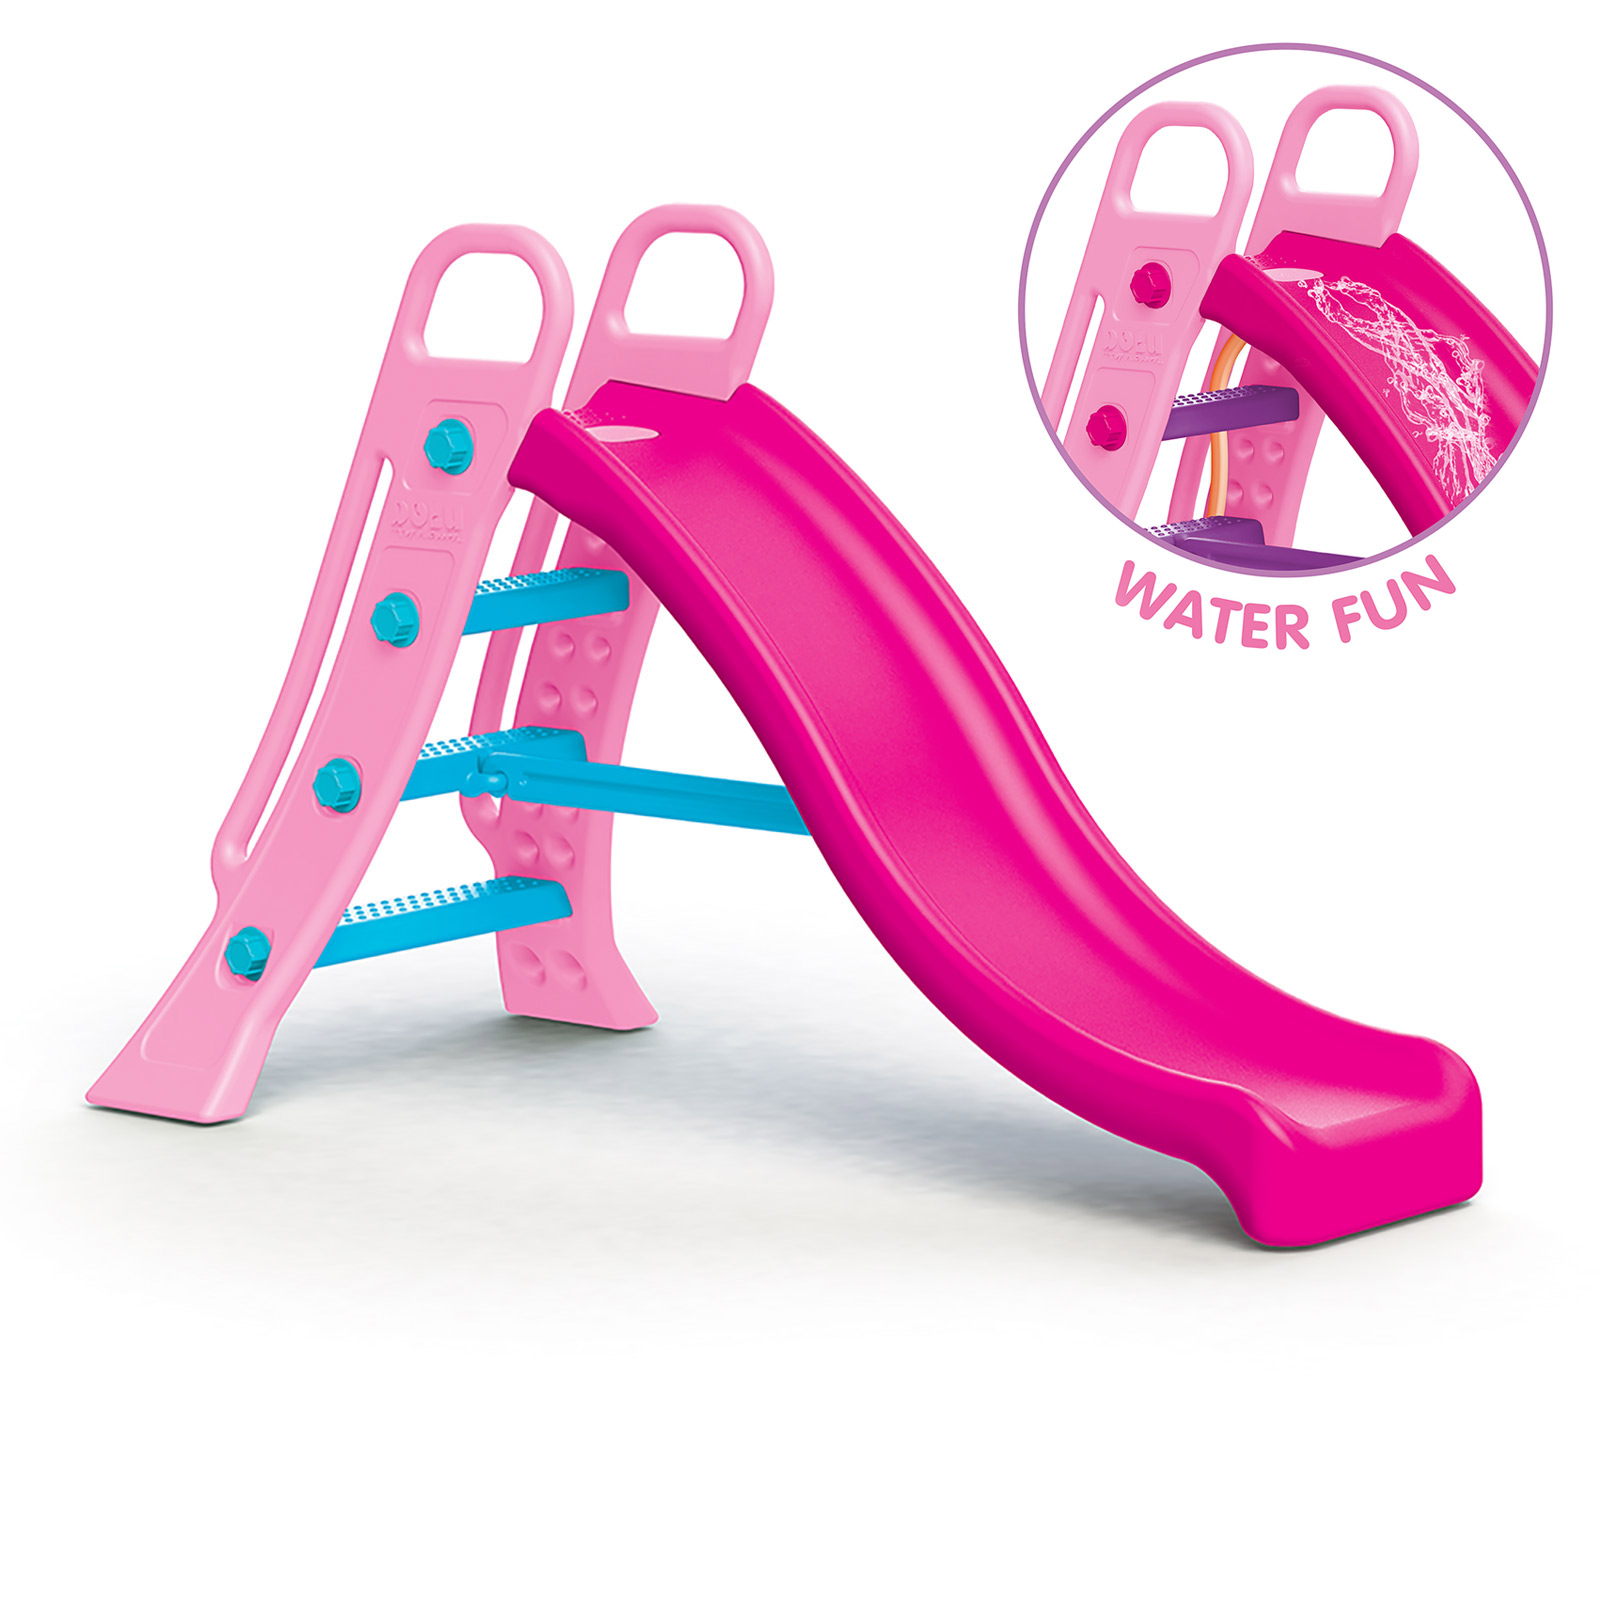 2in1 Unicorn Water Slide - Pink (3 - 6 Years)